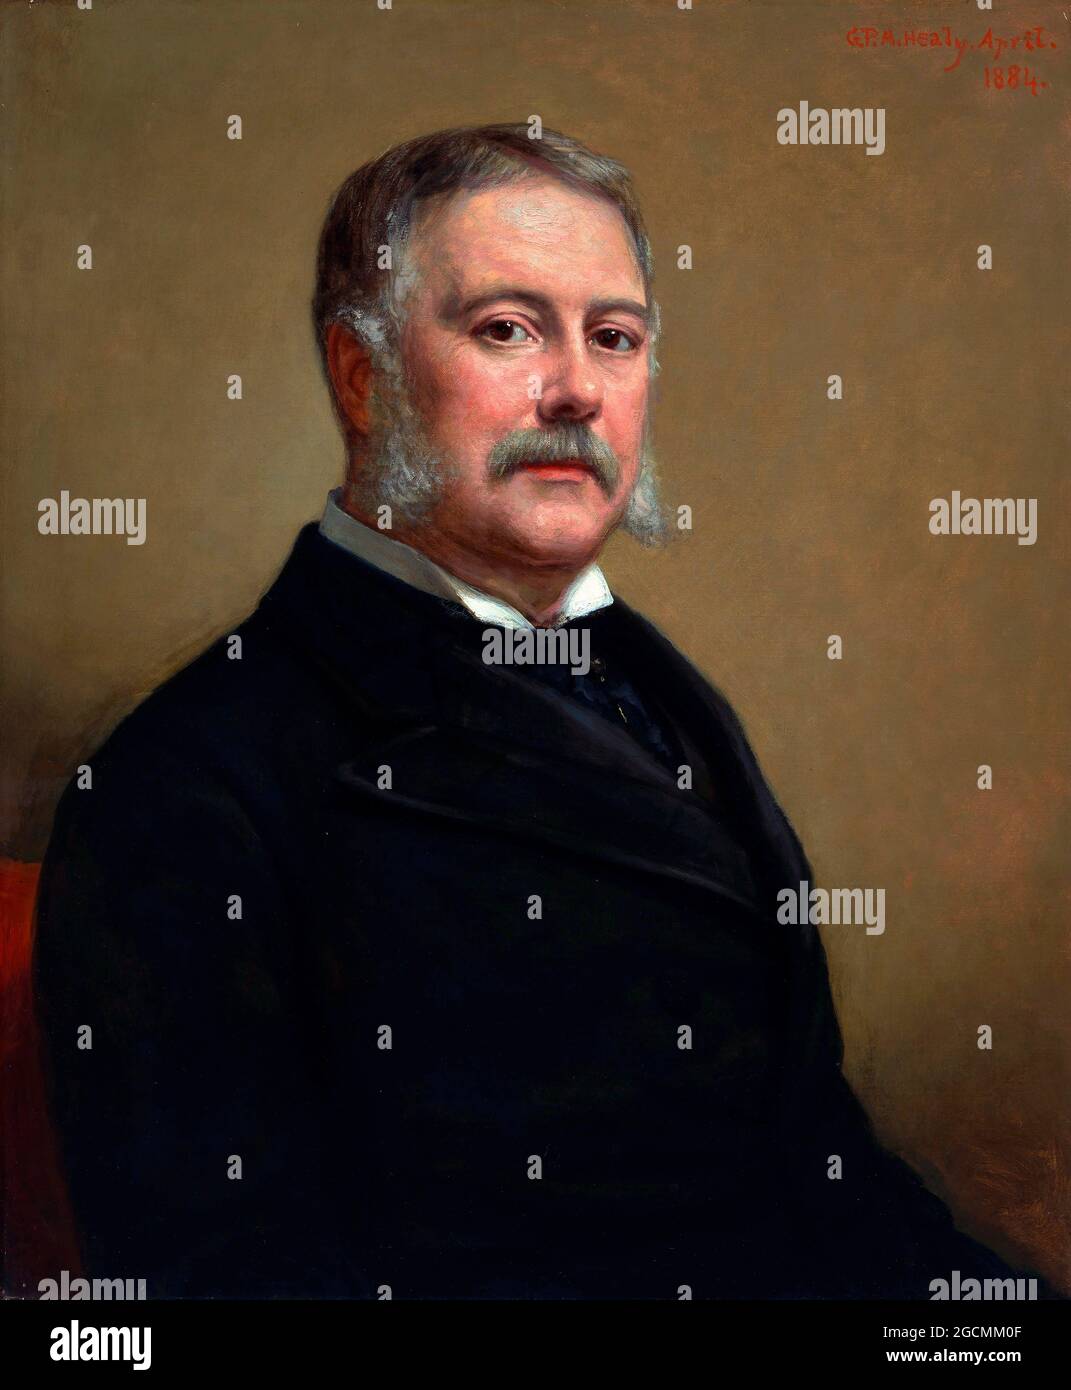 Chester Arthur. Porträt des 21. US-Präsidenten Chester A Arthur (1830-1886) von George Peter Alexander Healy, Öl auf Leinwand, 1884 Stockfoto